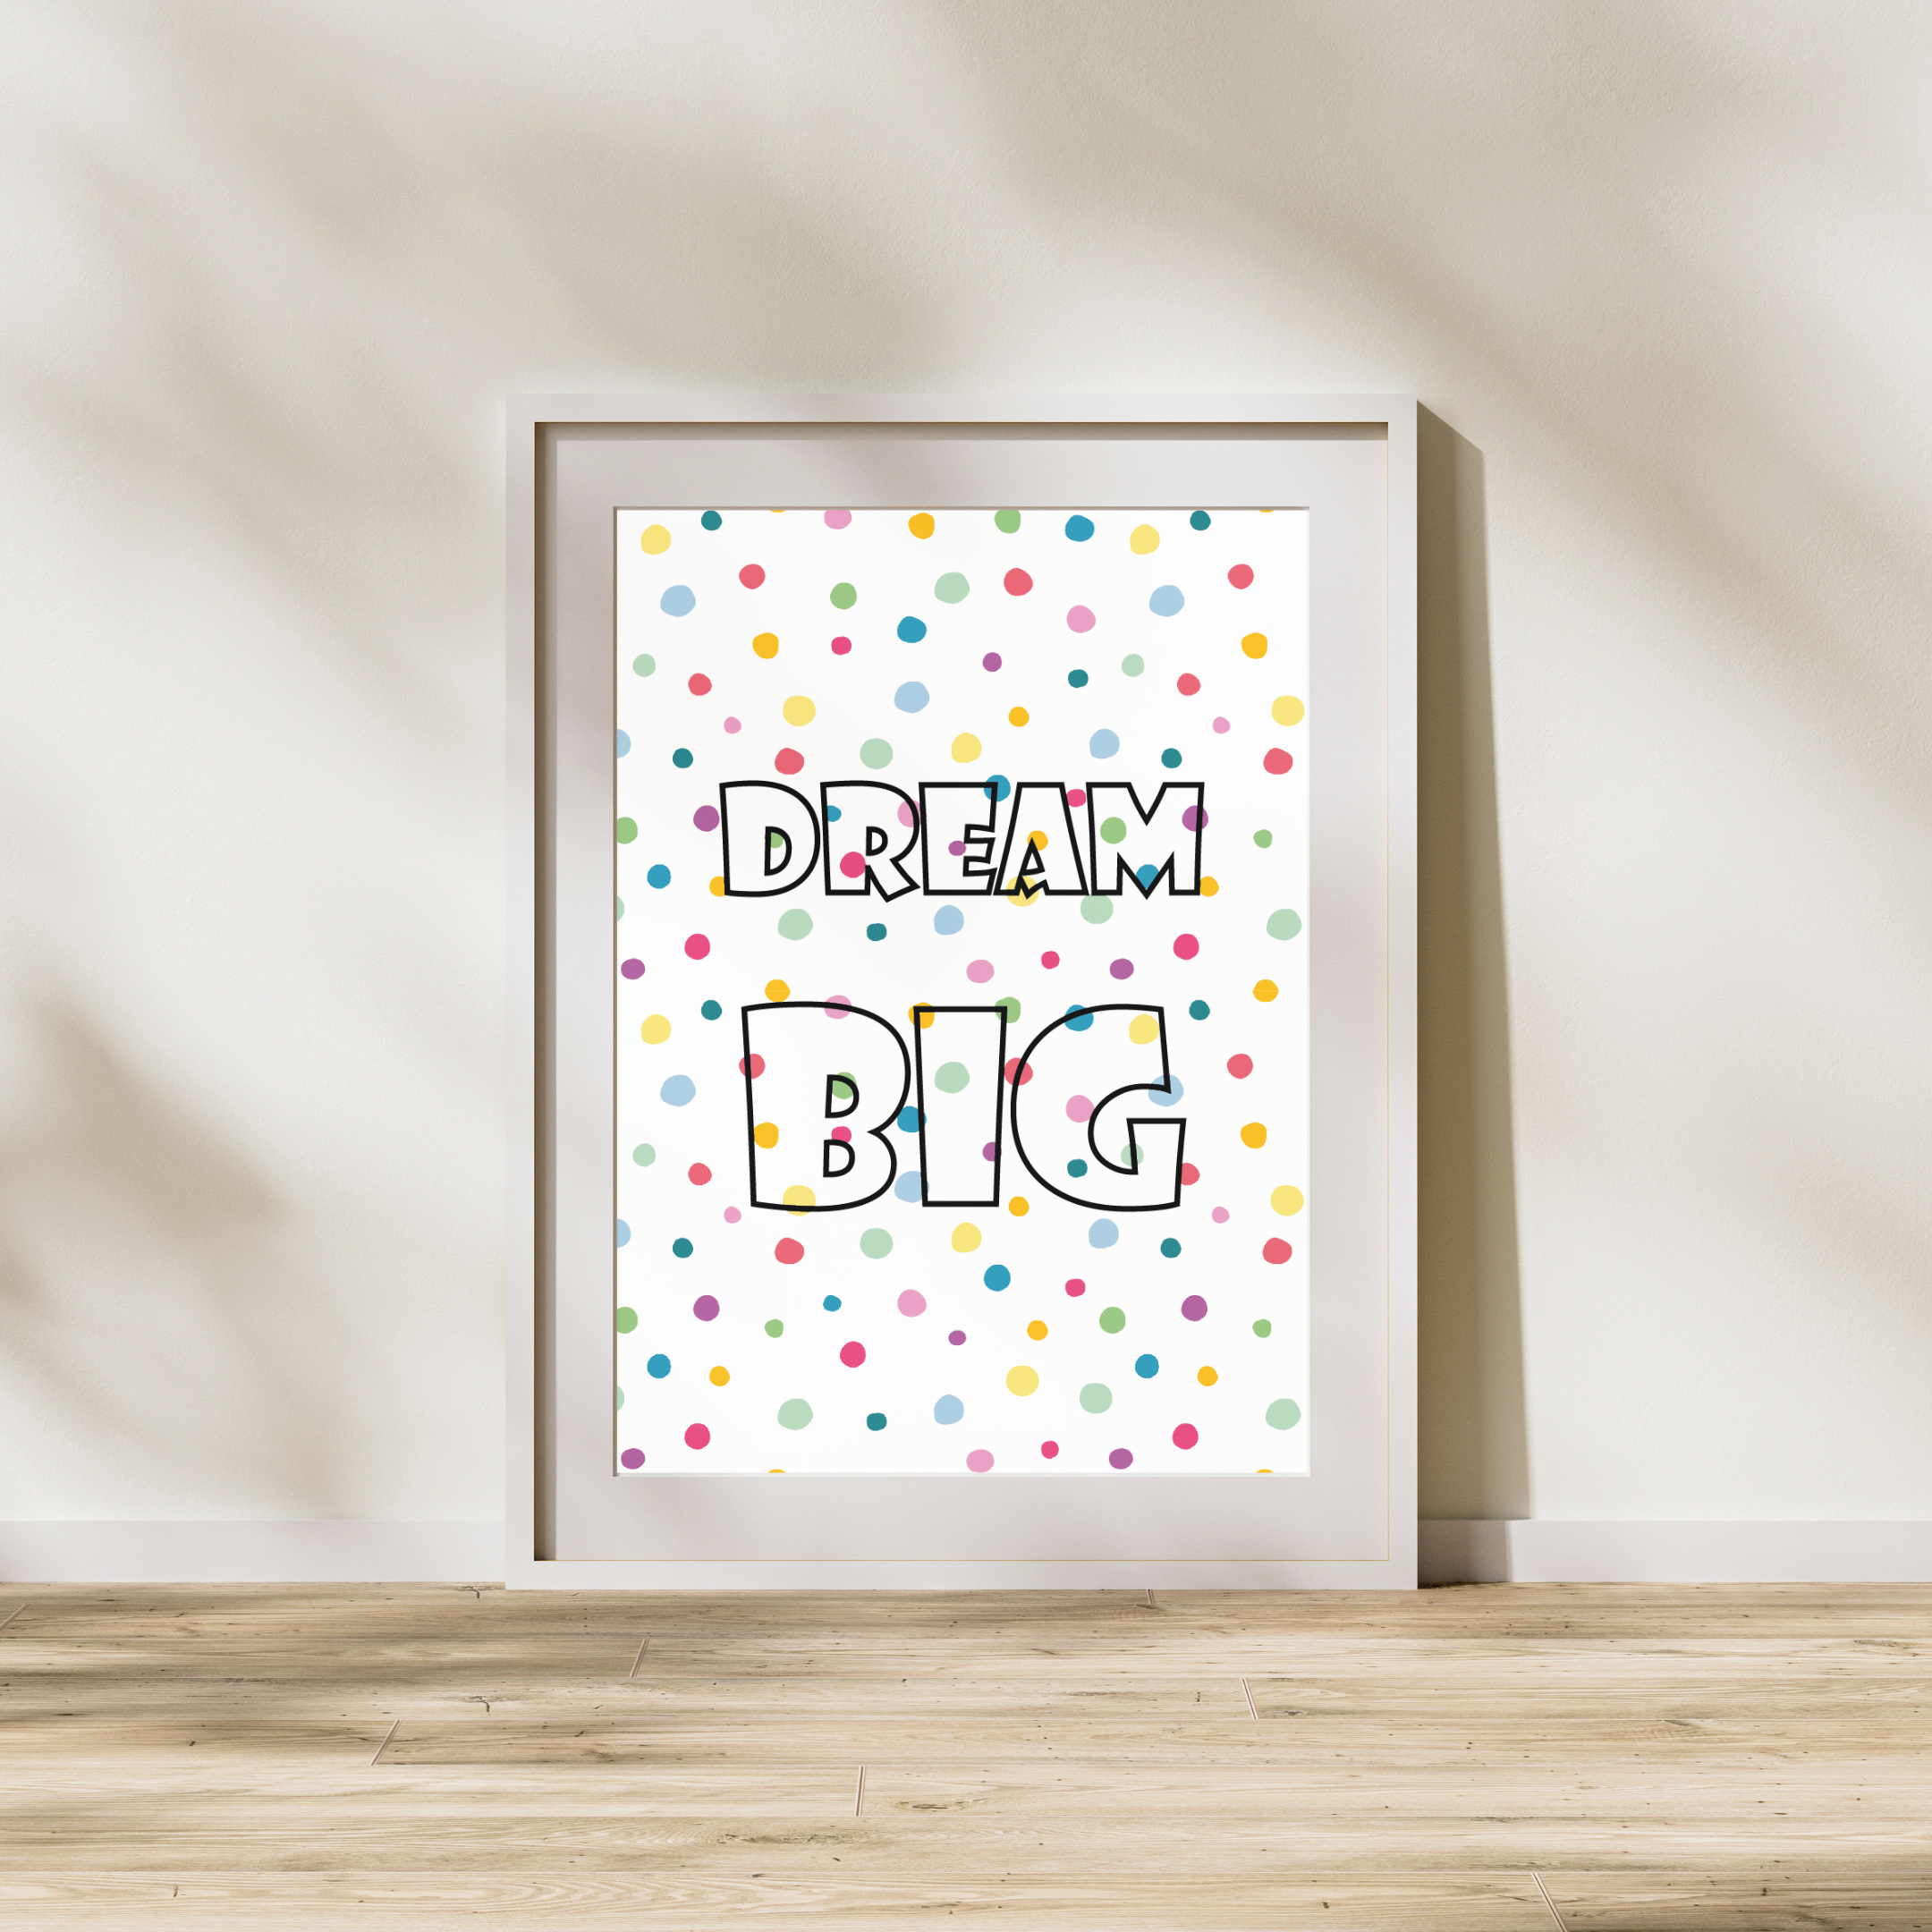 Dream big - Plakat